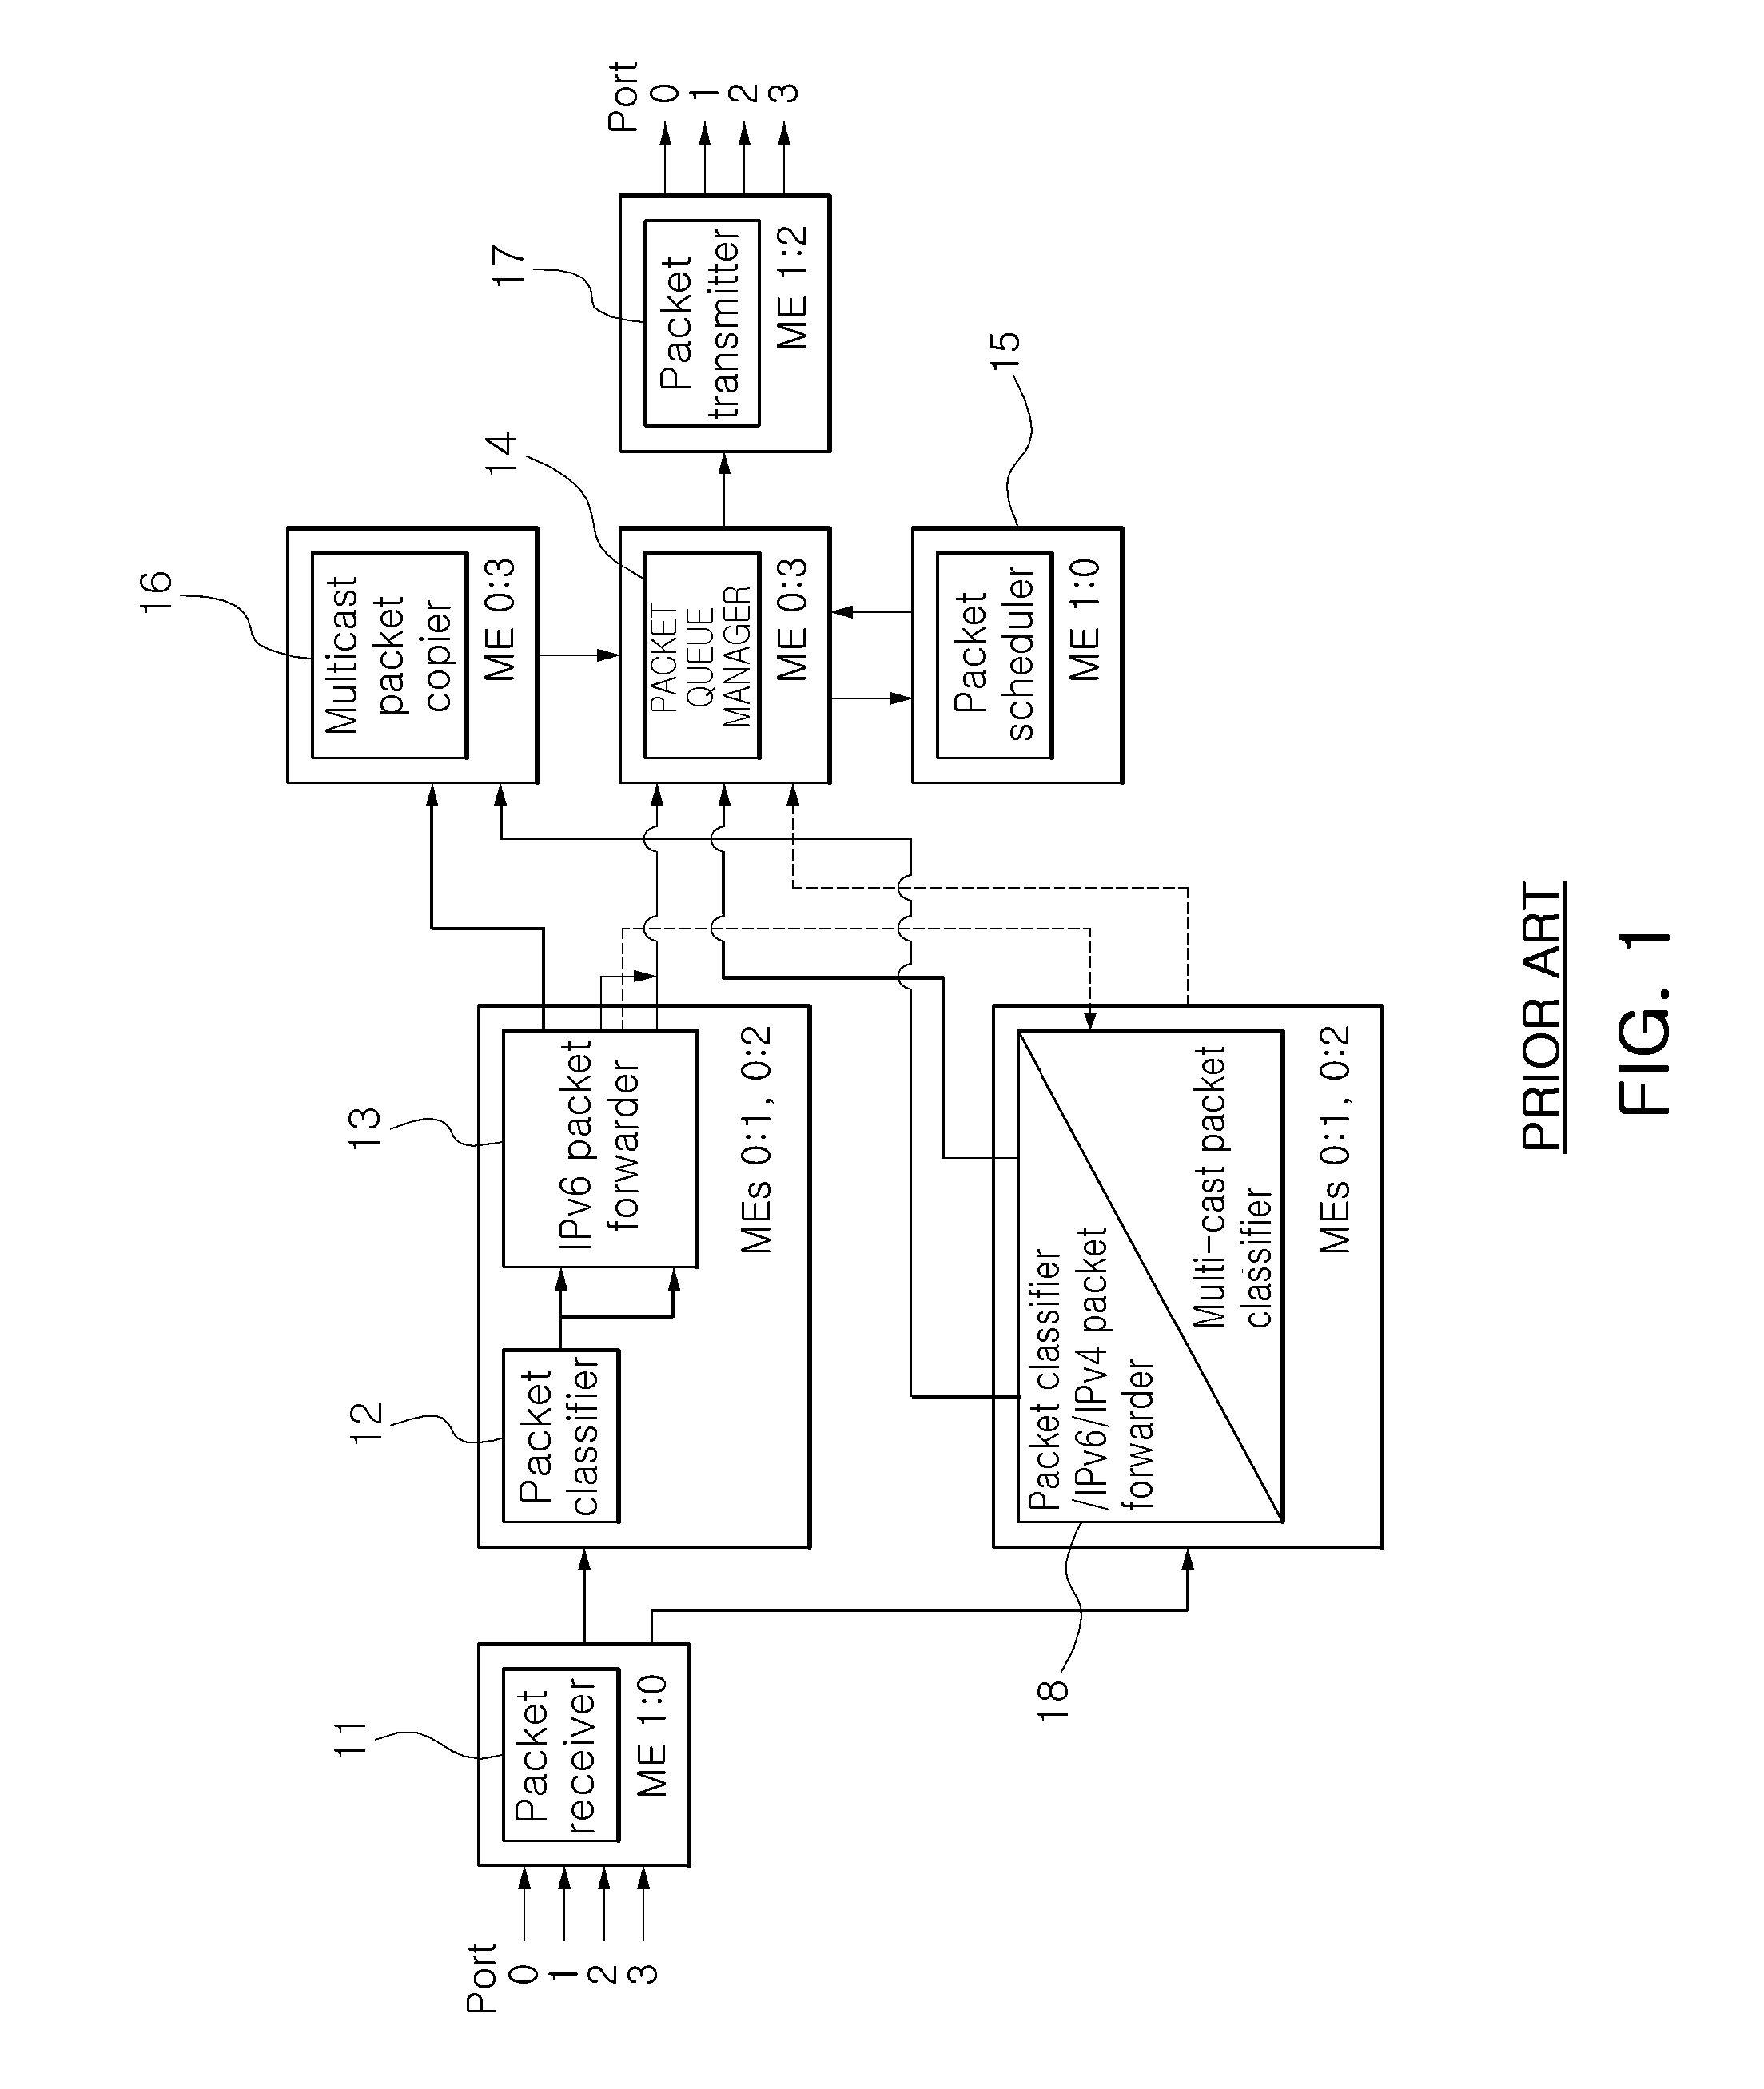 Packet processing apparatus and method codex